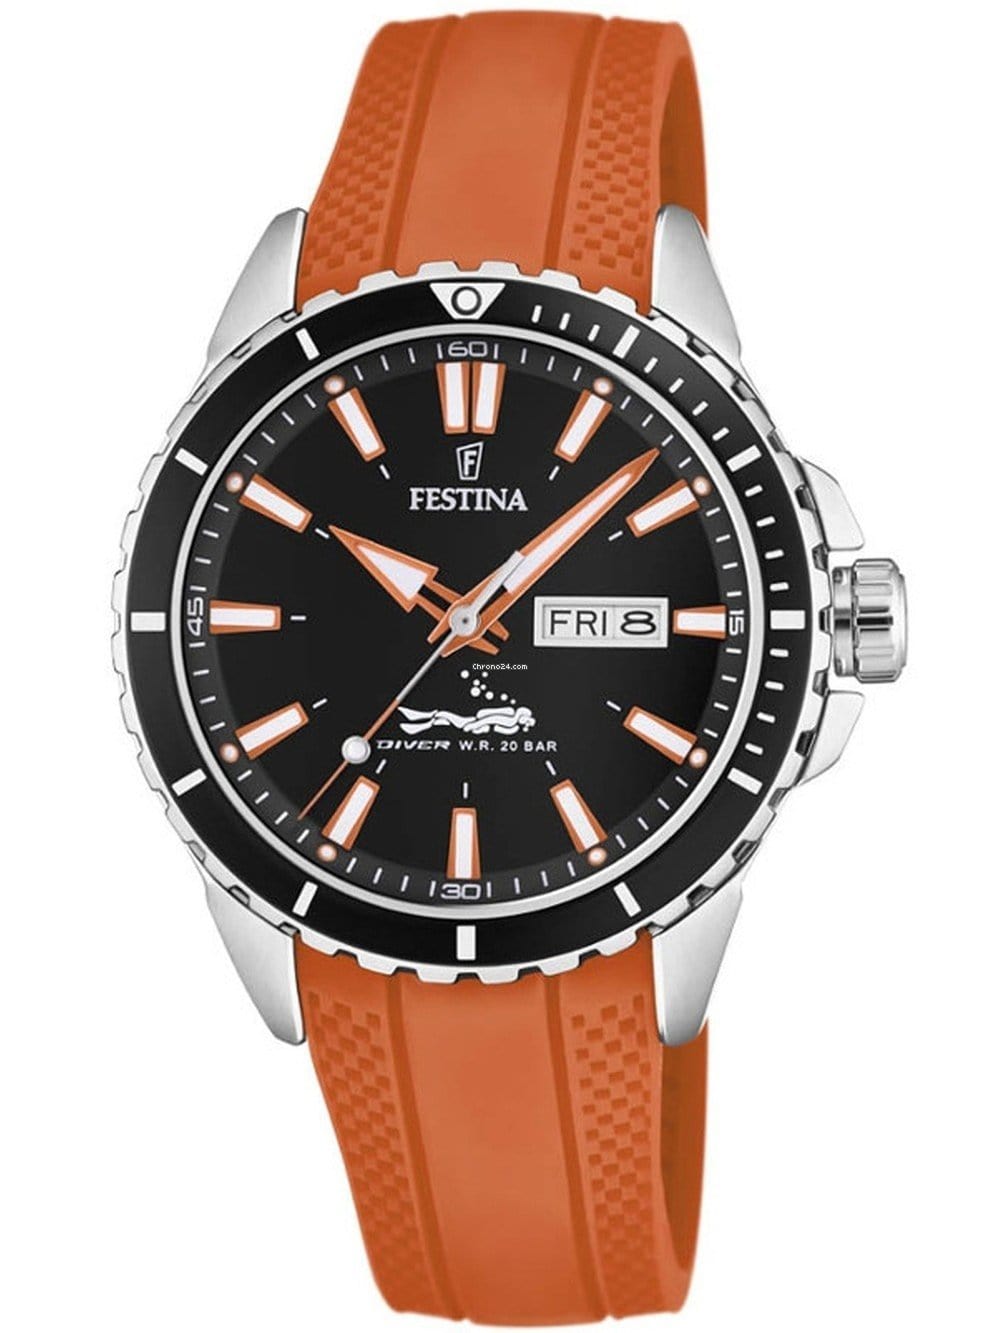 Festina Watch Festina Diver Orange Watch Brand